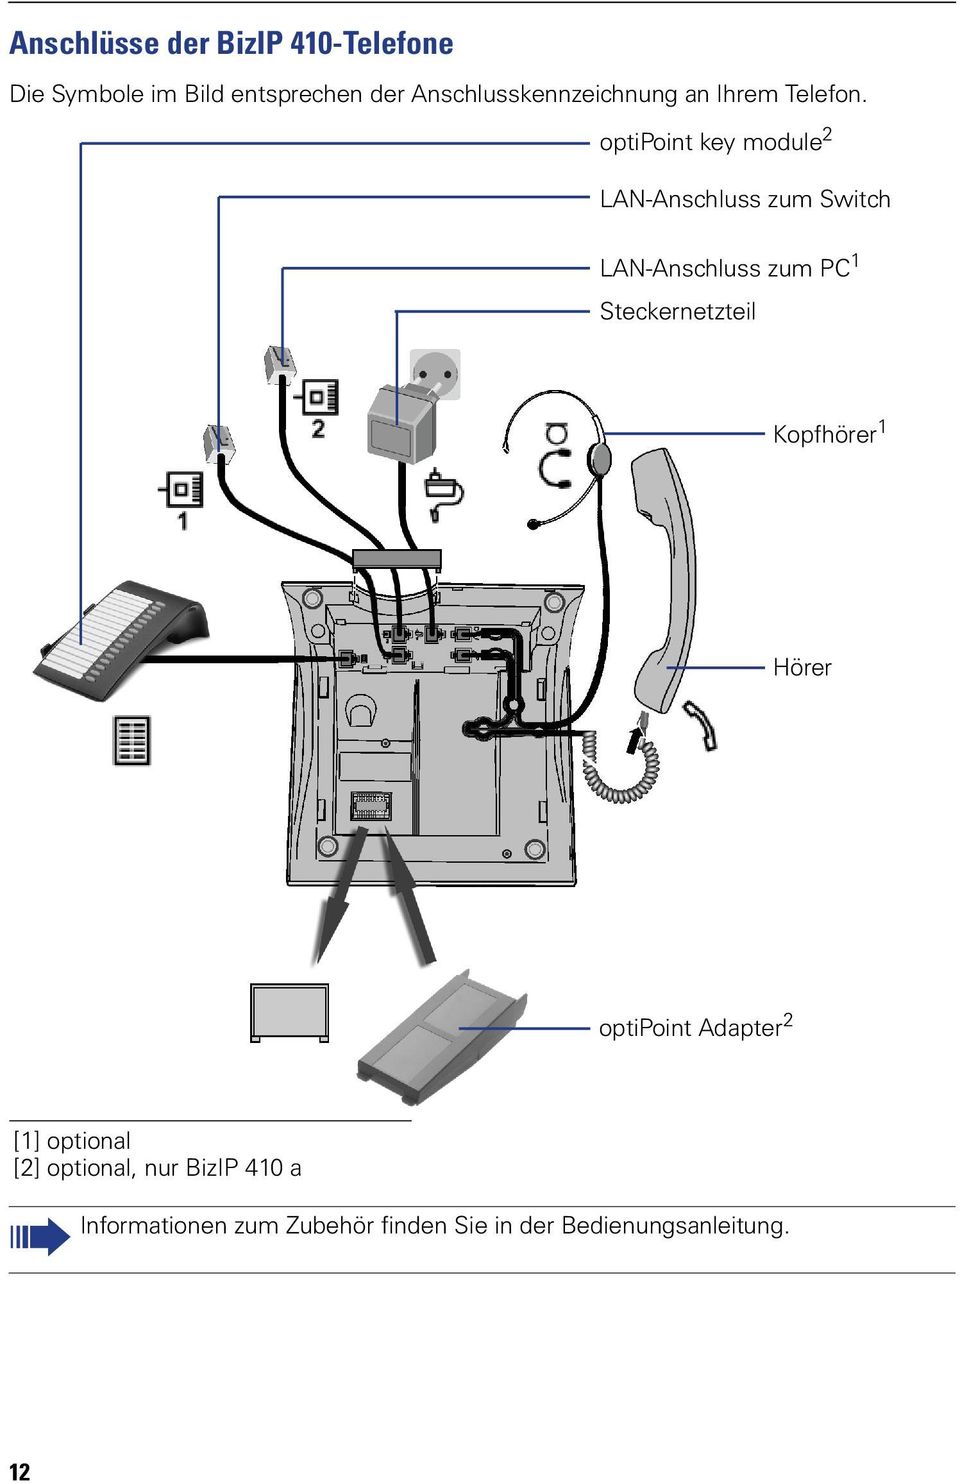 optipoint key module 2 LAN-Anschluss zum Switch LAN-Anschluss zum PC 1 Steckernetzteil